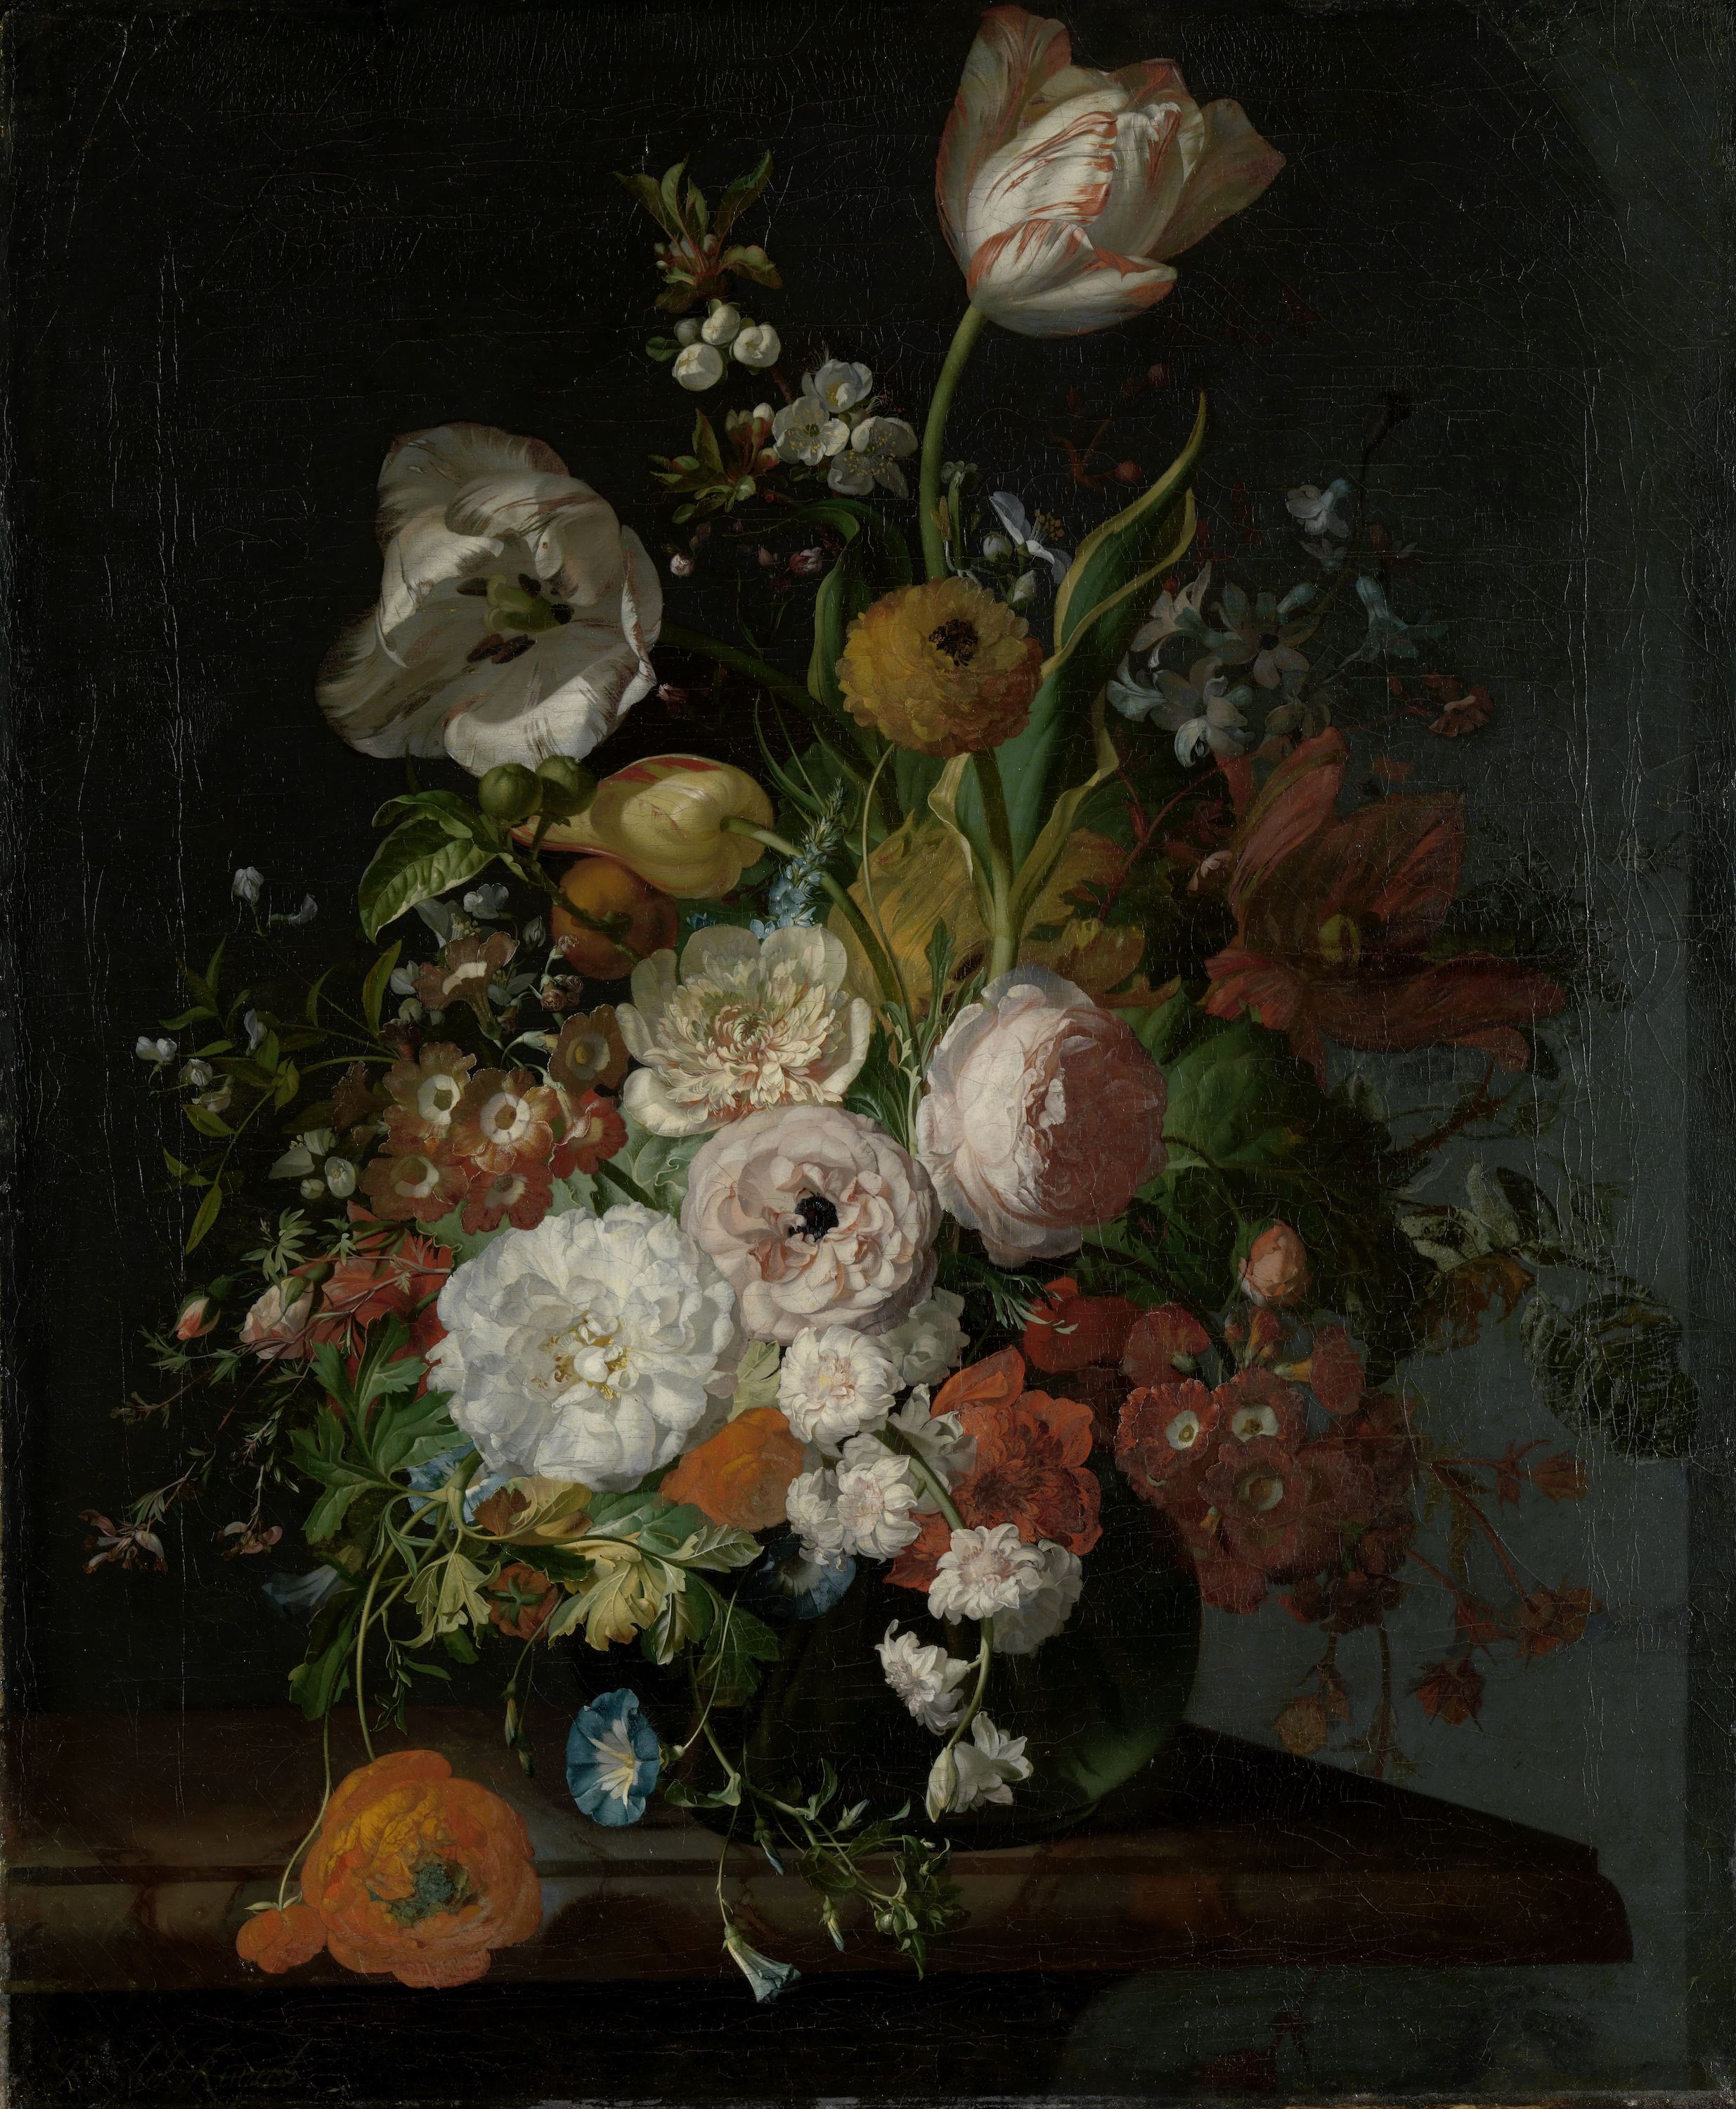 Still Life with Flowers in a Glass Vase by Rachel Ruysch - c. 1690 - c. 1720 - 65 cm × 53.5 cm Rijksmuseum